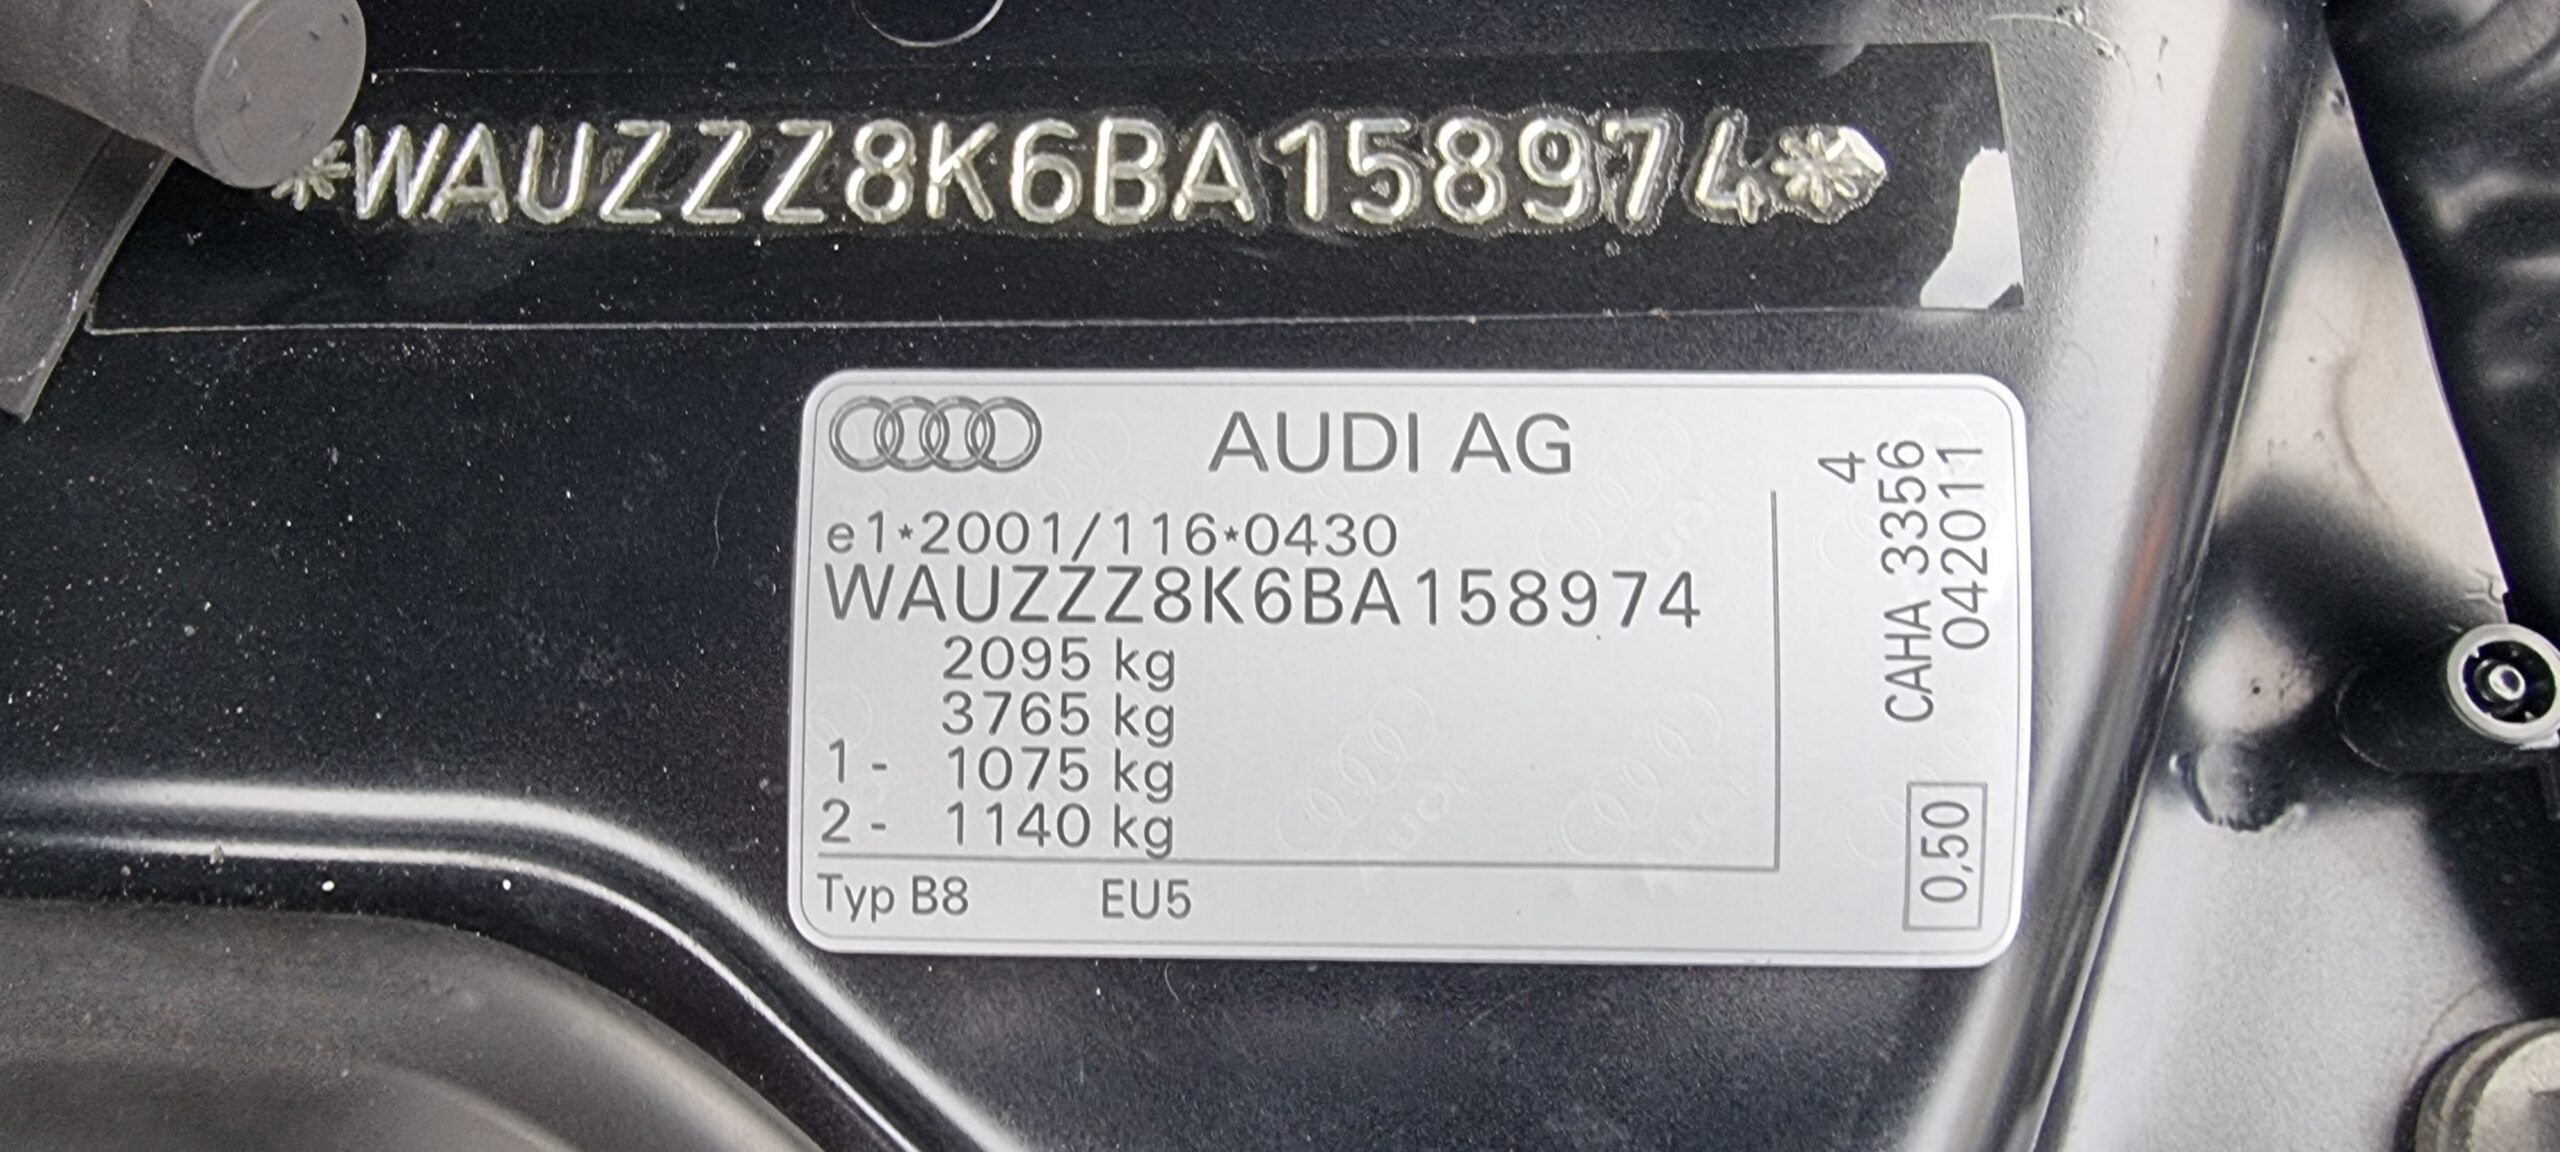 AUDI A4 S-LINE   2.0 TDI , 170 CP, EURO 5, AN 2011